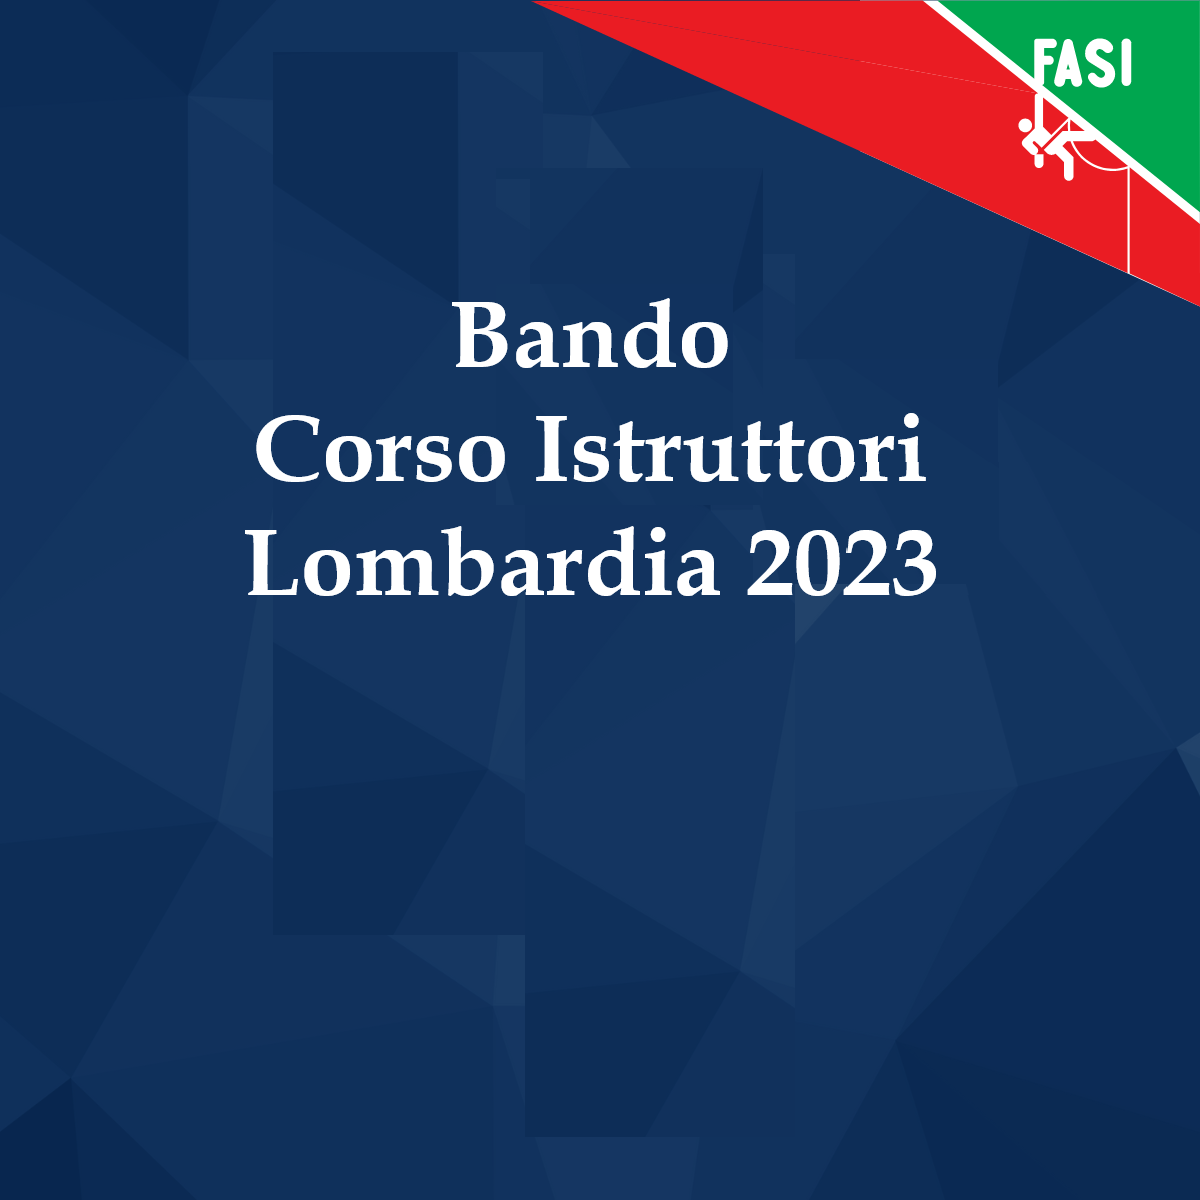 images/Comitati-Regionali/lombardia/Bando_corso_lombardia_2023.png